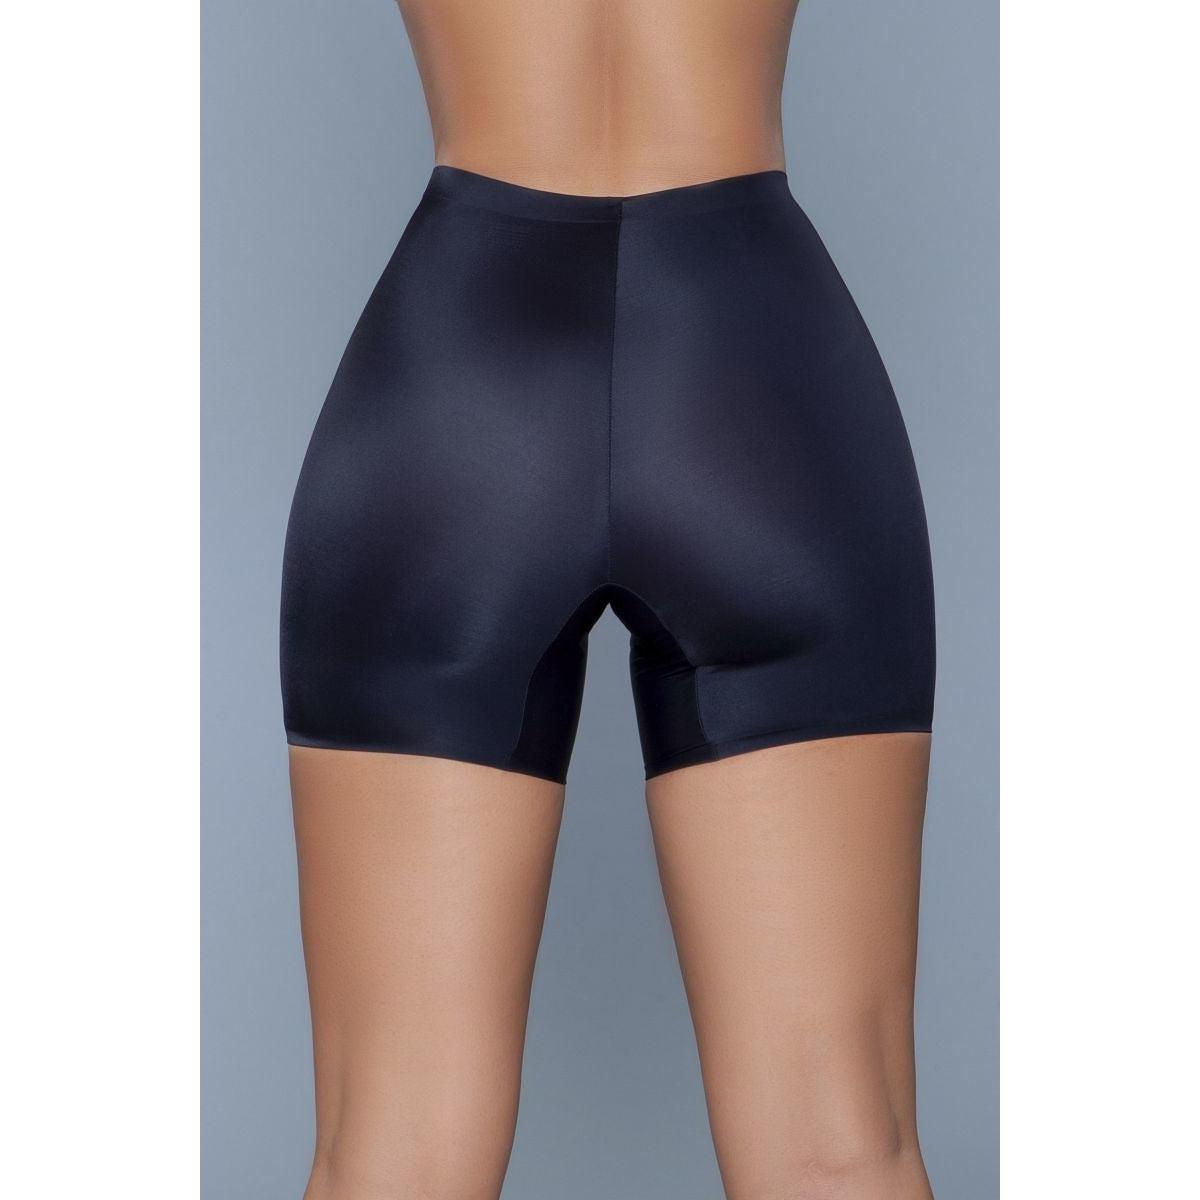 Black Seamless Mid-waist And Anti-chafing Slip Shorts-Underwear-NXTLVLNYC